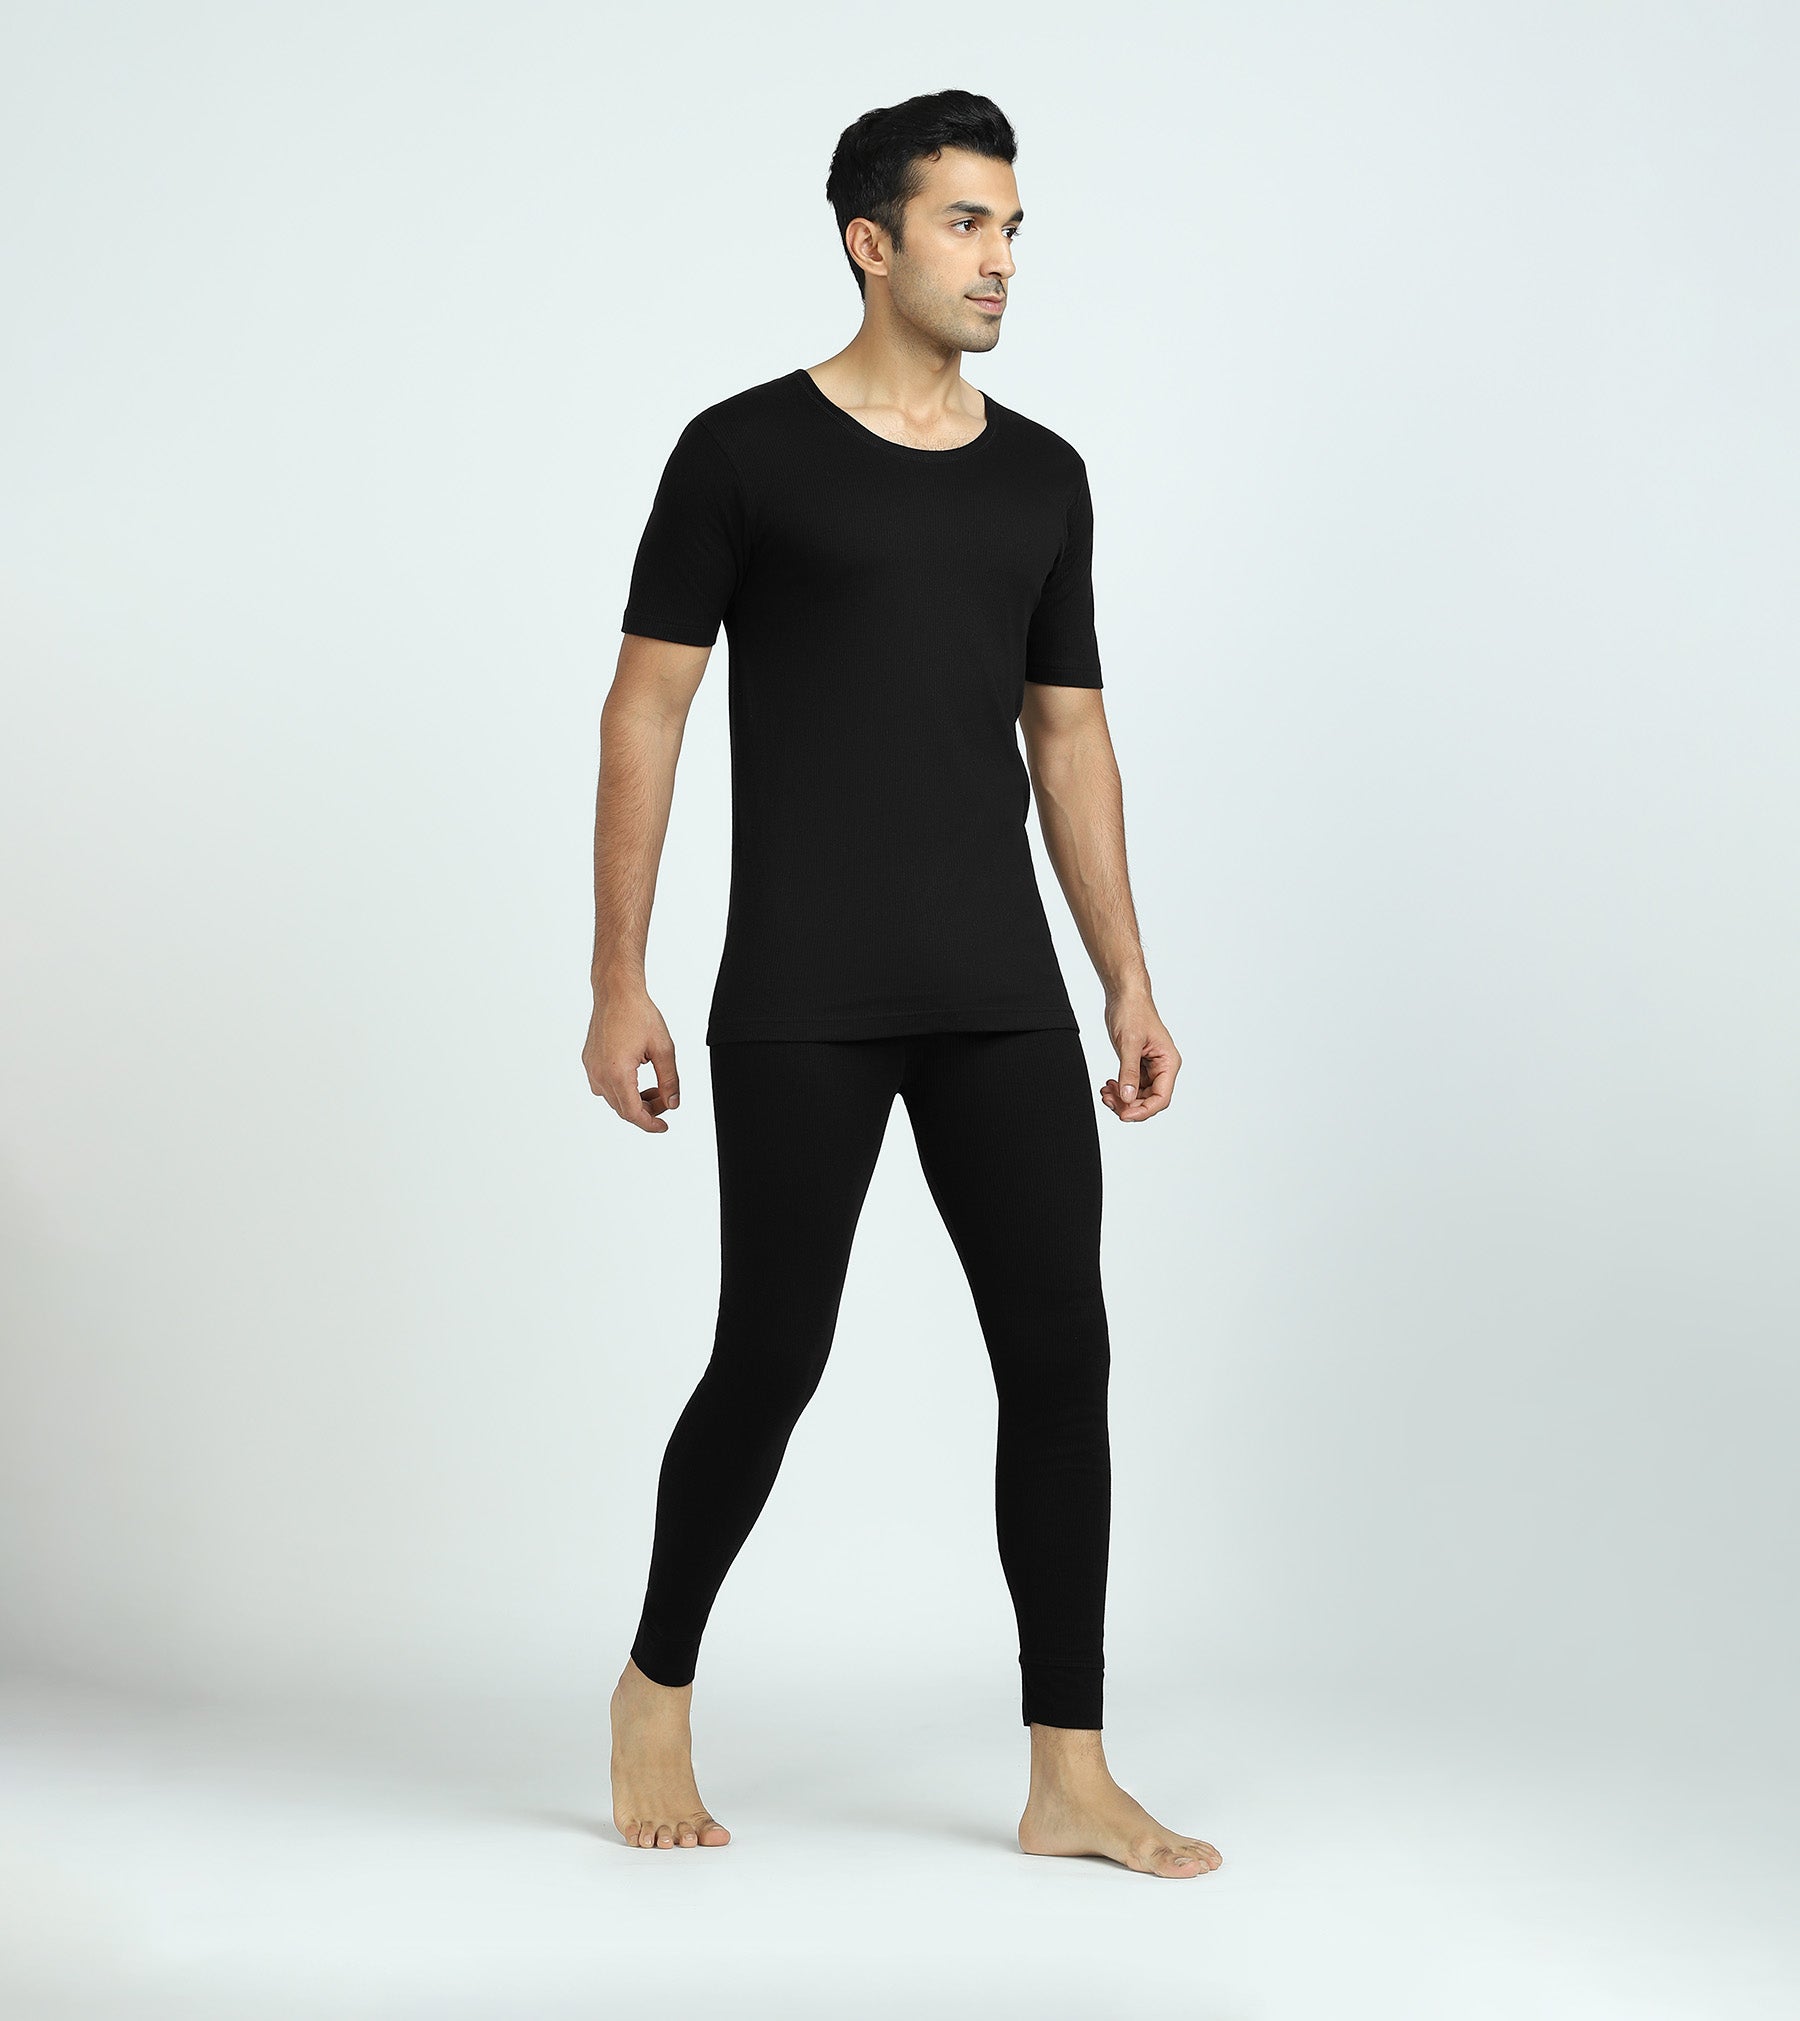 Alpine Cotton Rich Short Sleeve Thermal Set For Men Pitch Black - XYXX Mens Apparels